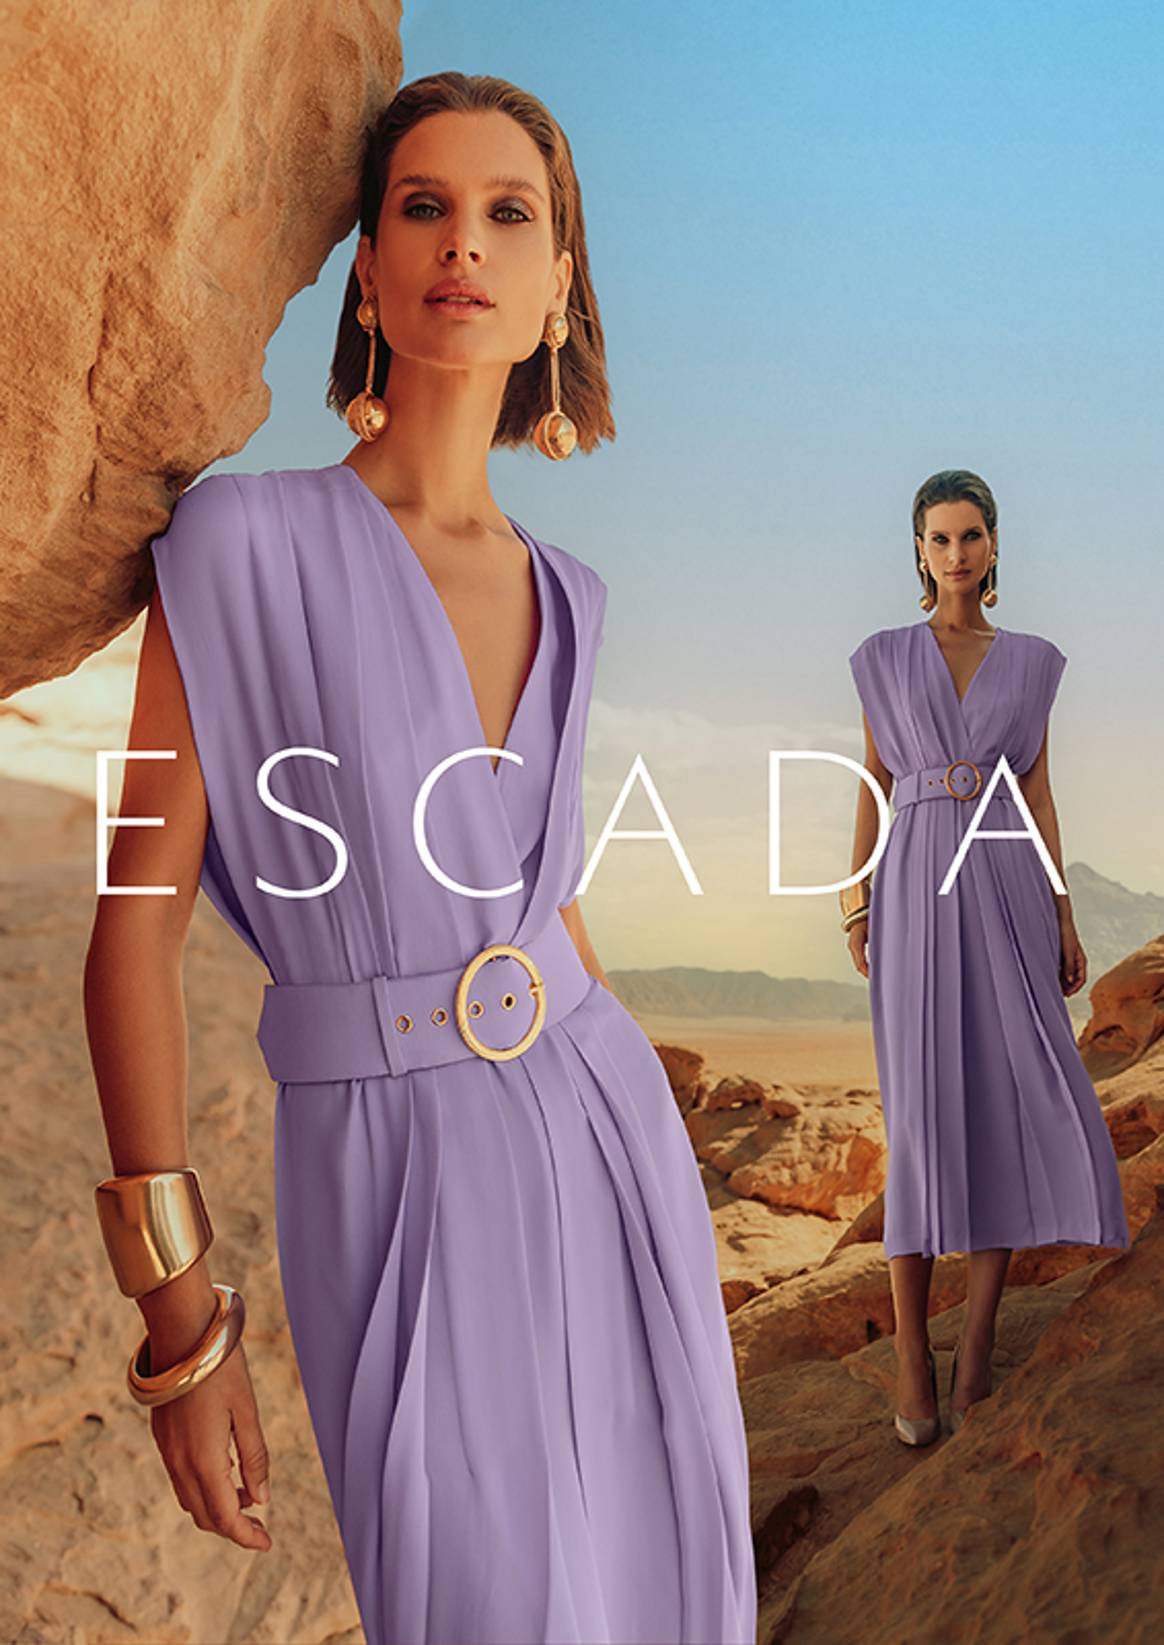 Escada SS23: For endless summer days